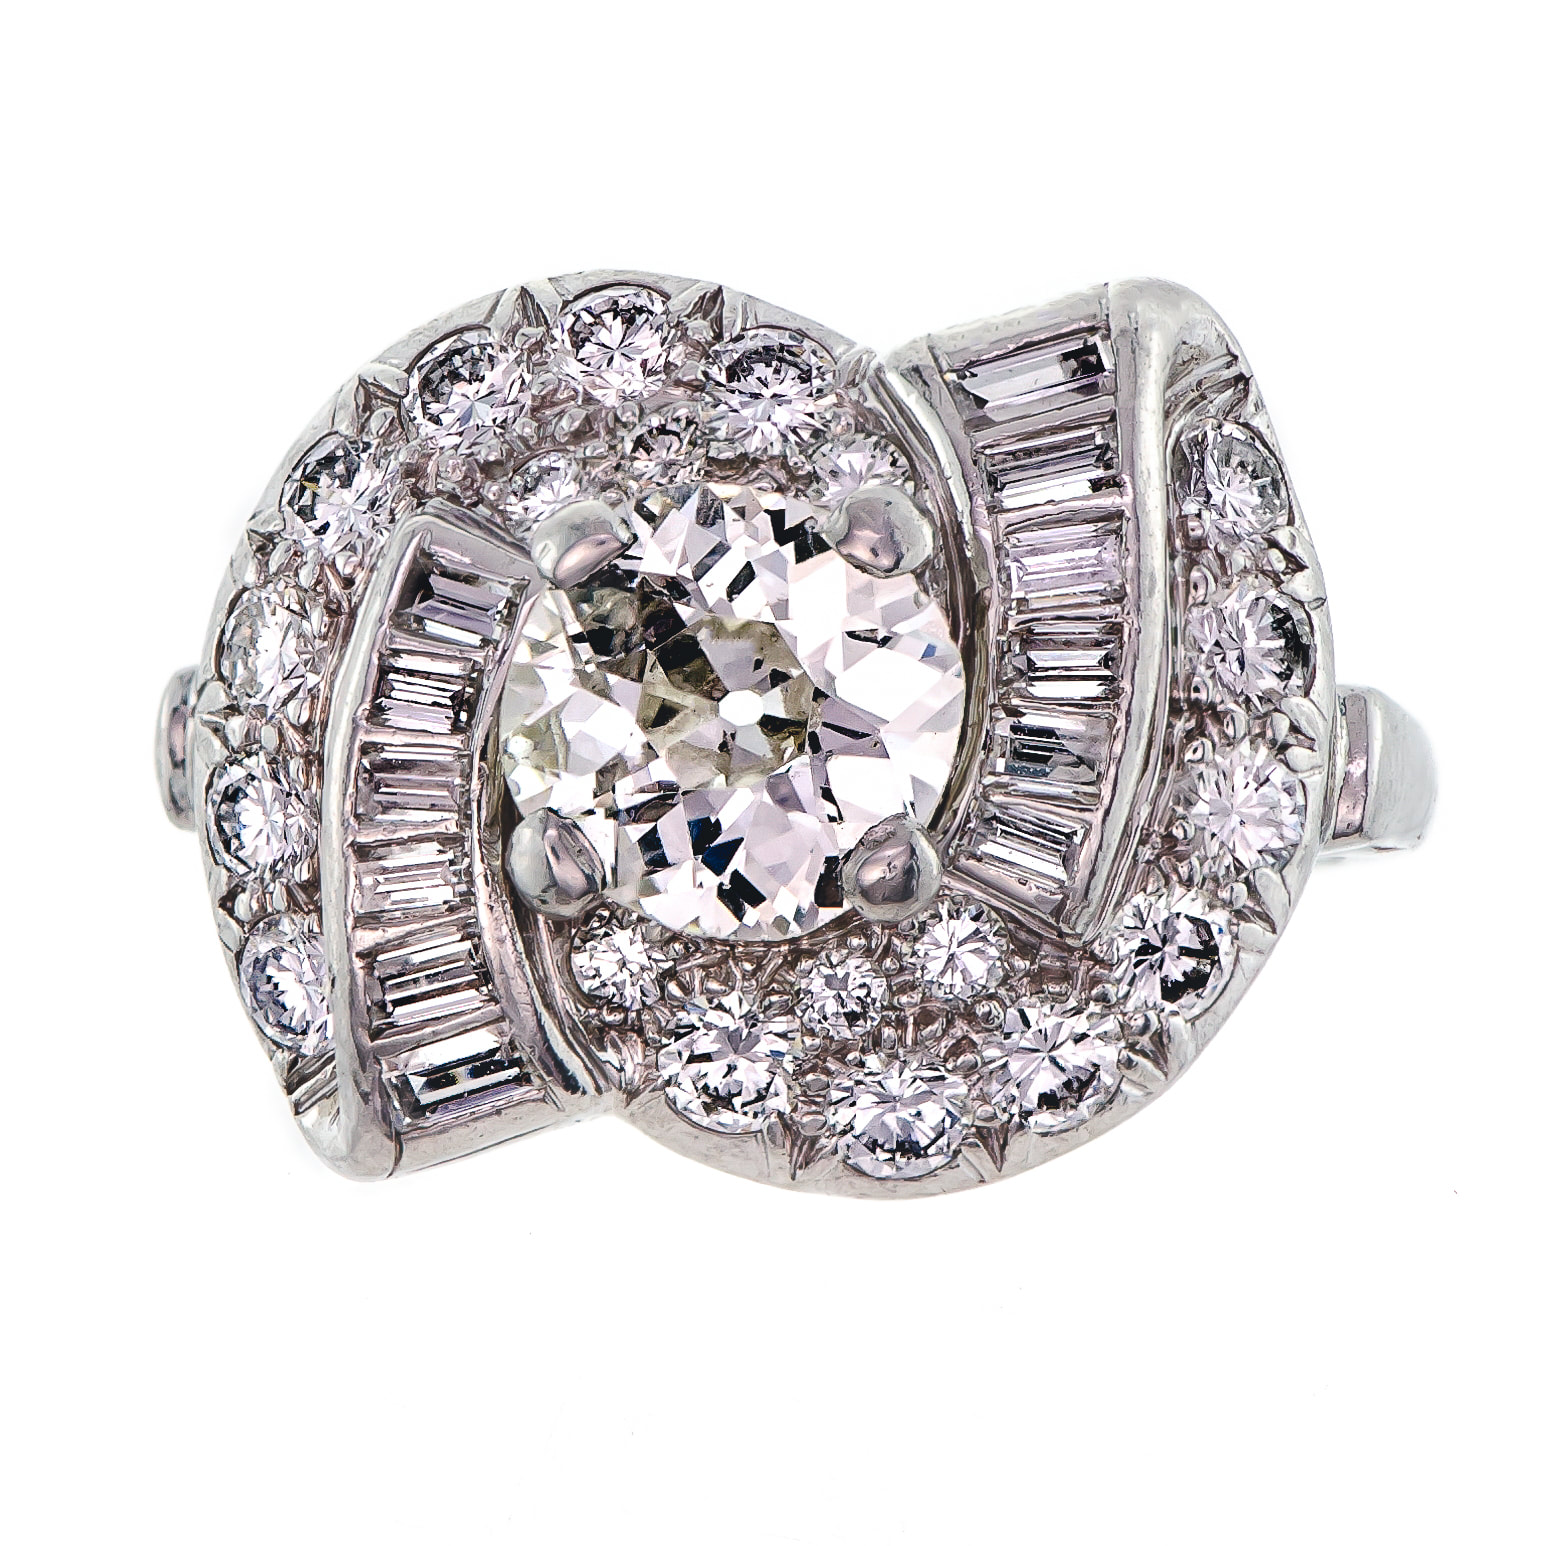 1930s Vintage Diamond Engagement Ring, Platinum Art Deco 0.78 ctw Old Cut Diamond  Ring. - Addy's Vintage